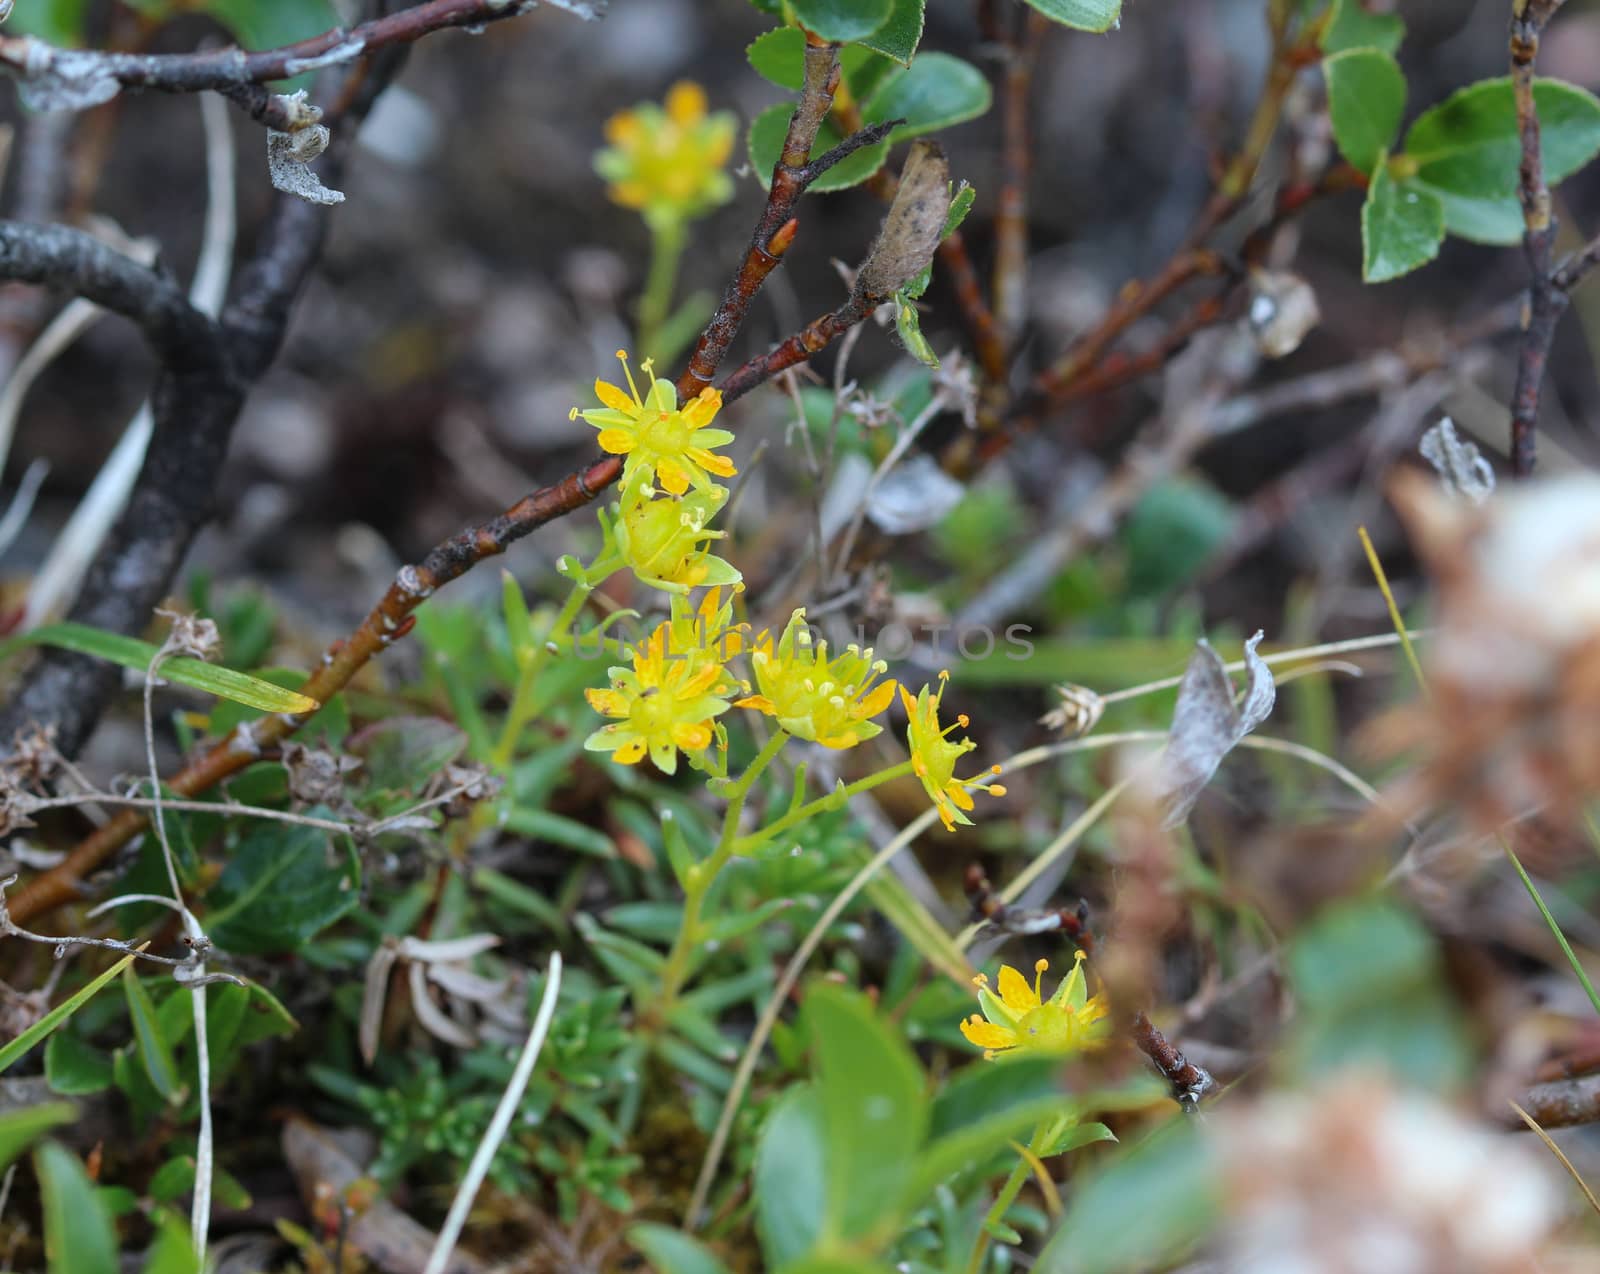 Close up of Saxifraga aizoides flower, also known as yellow mountain saxifrage or yellow saxifrage